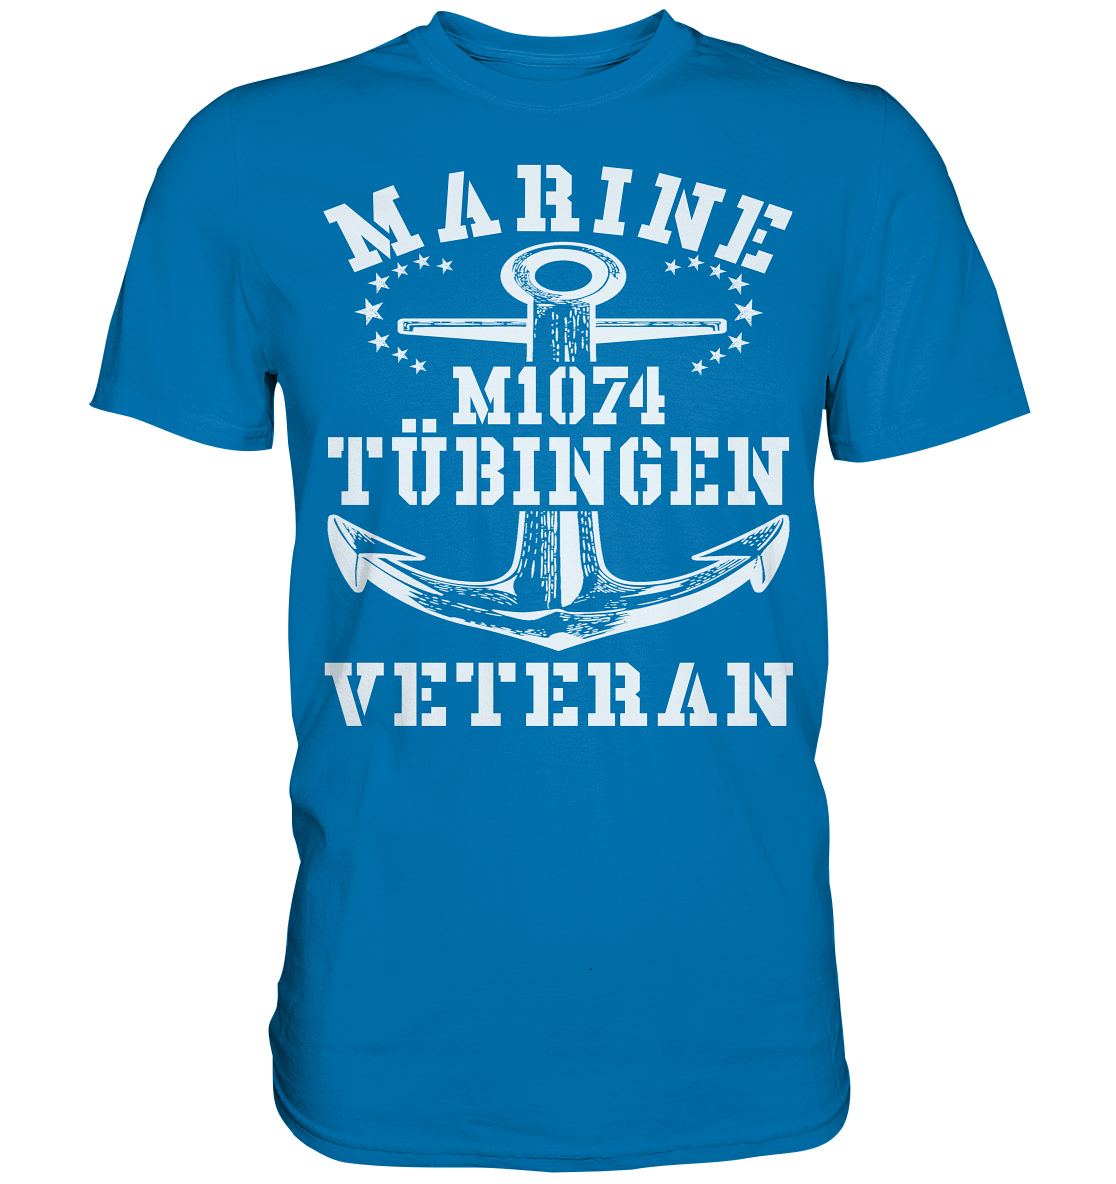 MARINE VETERAN M1074 TÜBINGEN - Premium Shirt